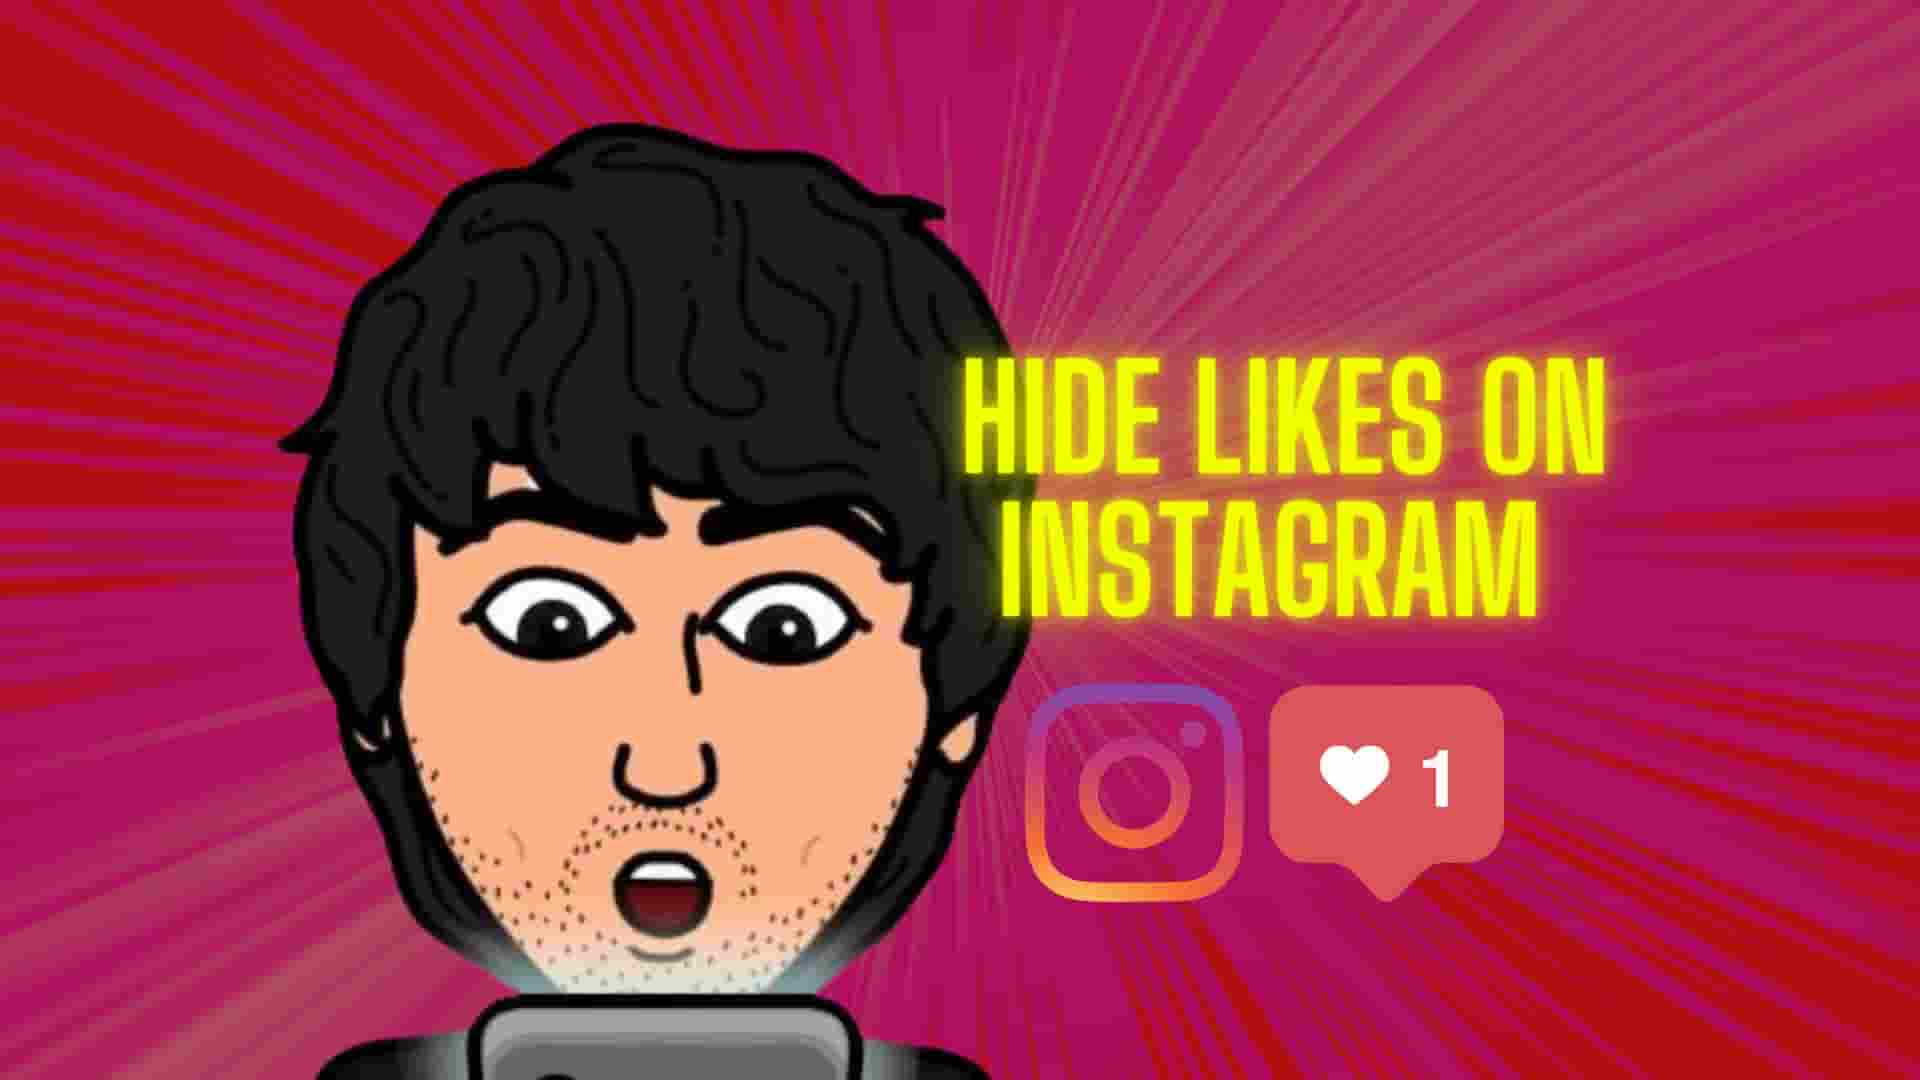 Hide likes on Instagram